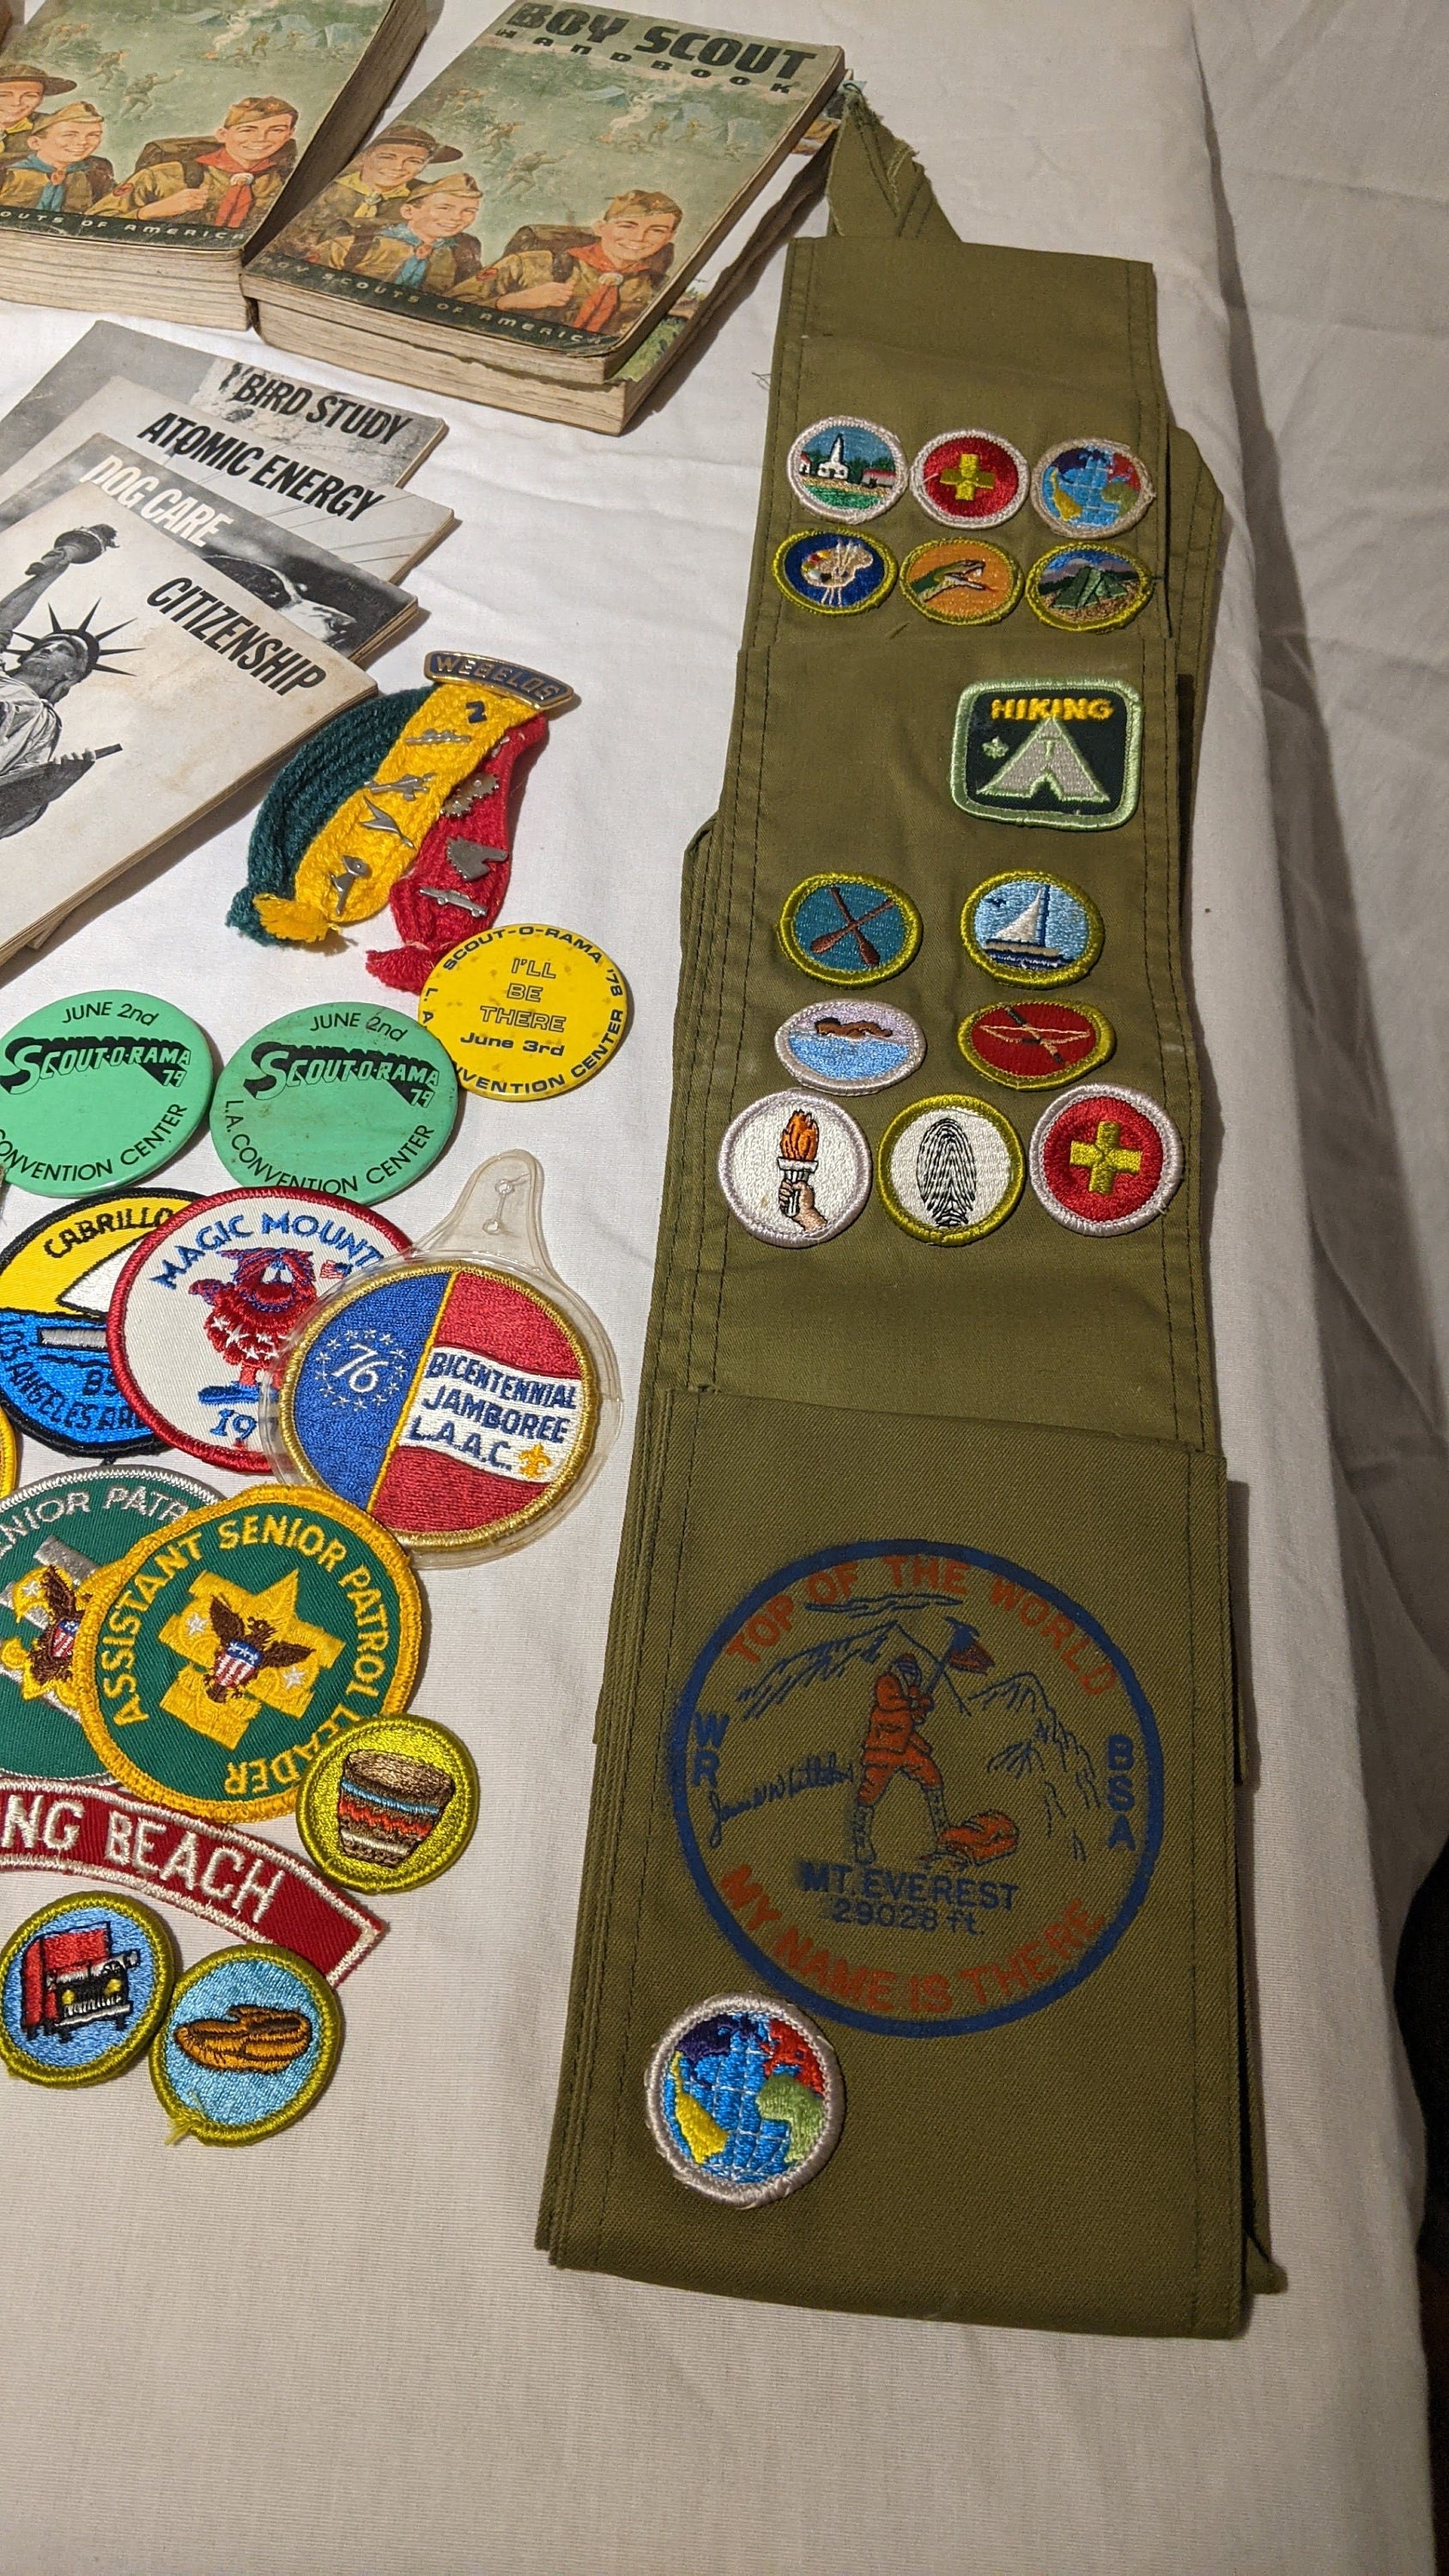 Boy Scouts Wood Badge Pins, 2 Pins [2478]